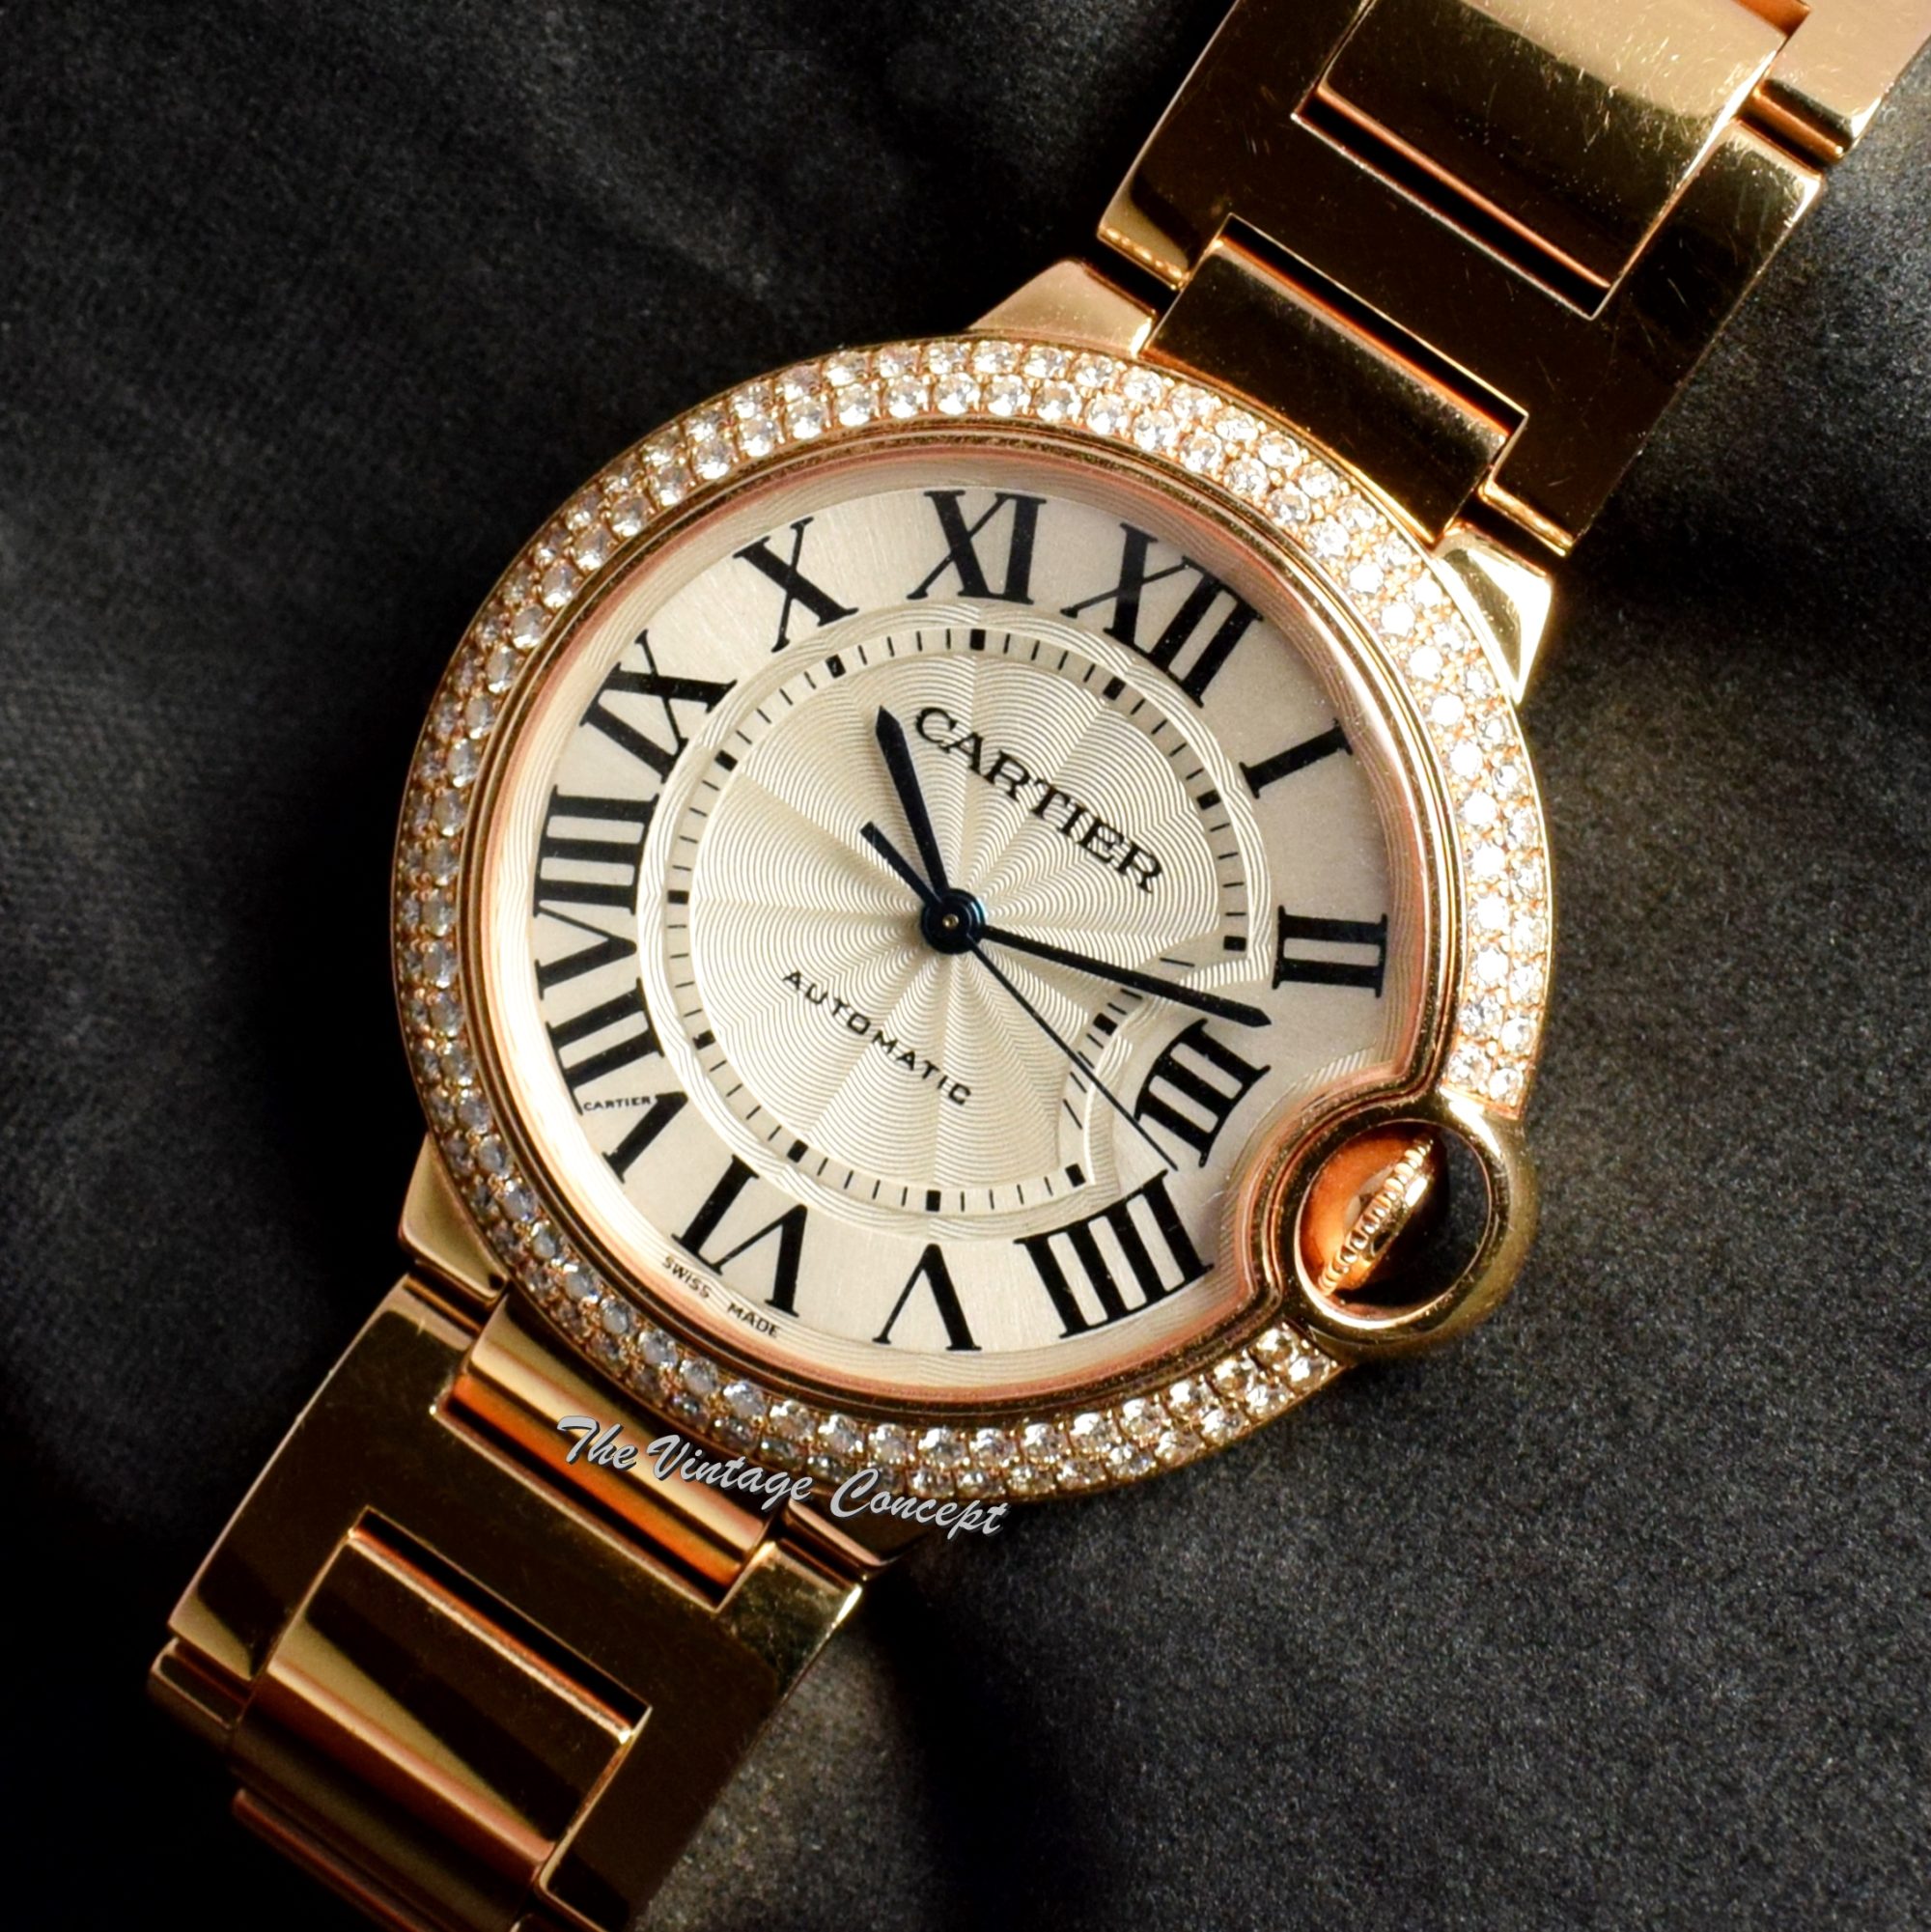 Pre-owned Cartier 18K Rose Gold Ballon Bleu WE9005Z3 Diamond Bezel Watch (Full Set) (SOLD) - The Vintage Concept